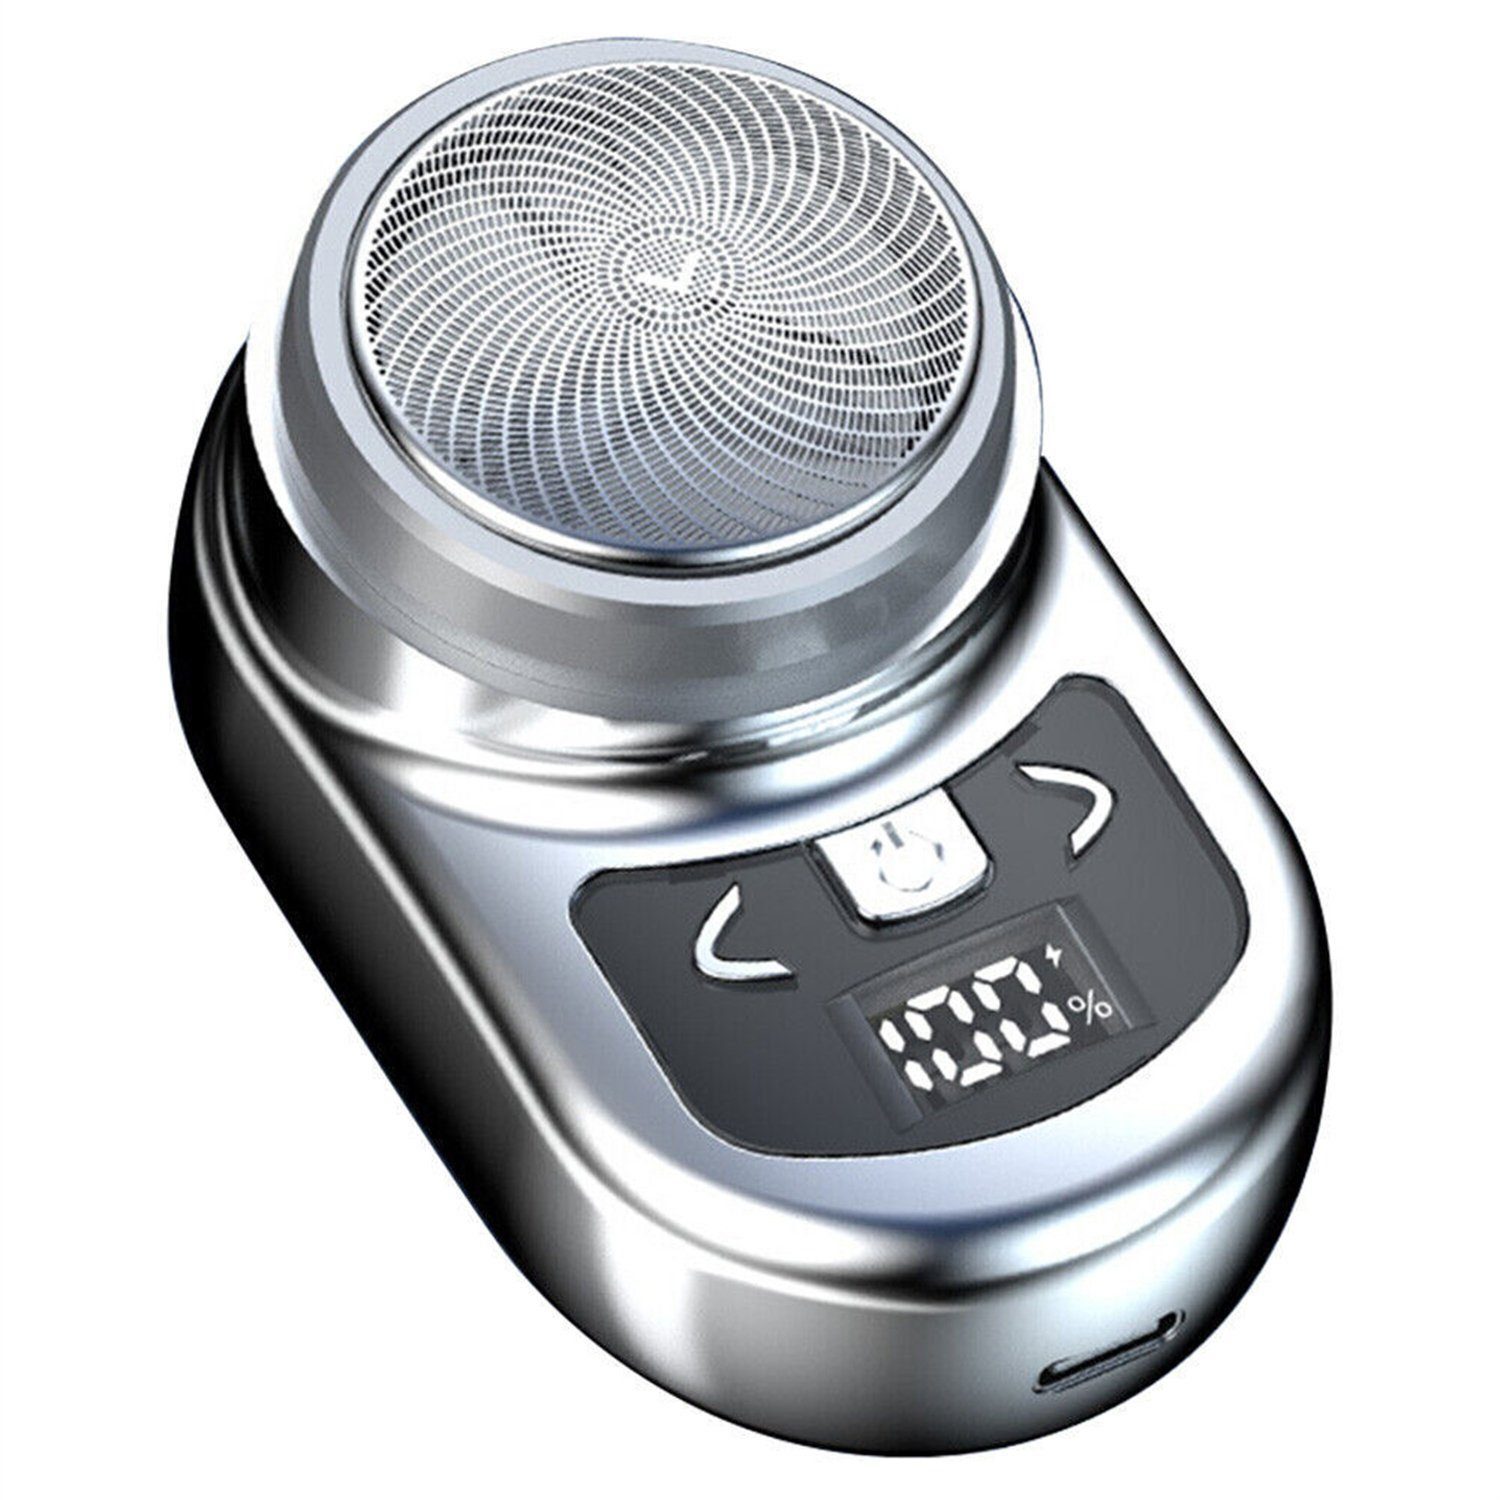 Mini-tragbar mit Körperrasierer XDOVET USB-Aufladung, Elektrokörperrasierer silver Leistungsanzeige,